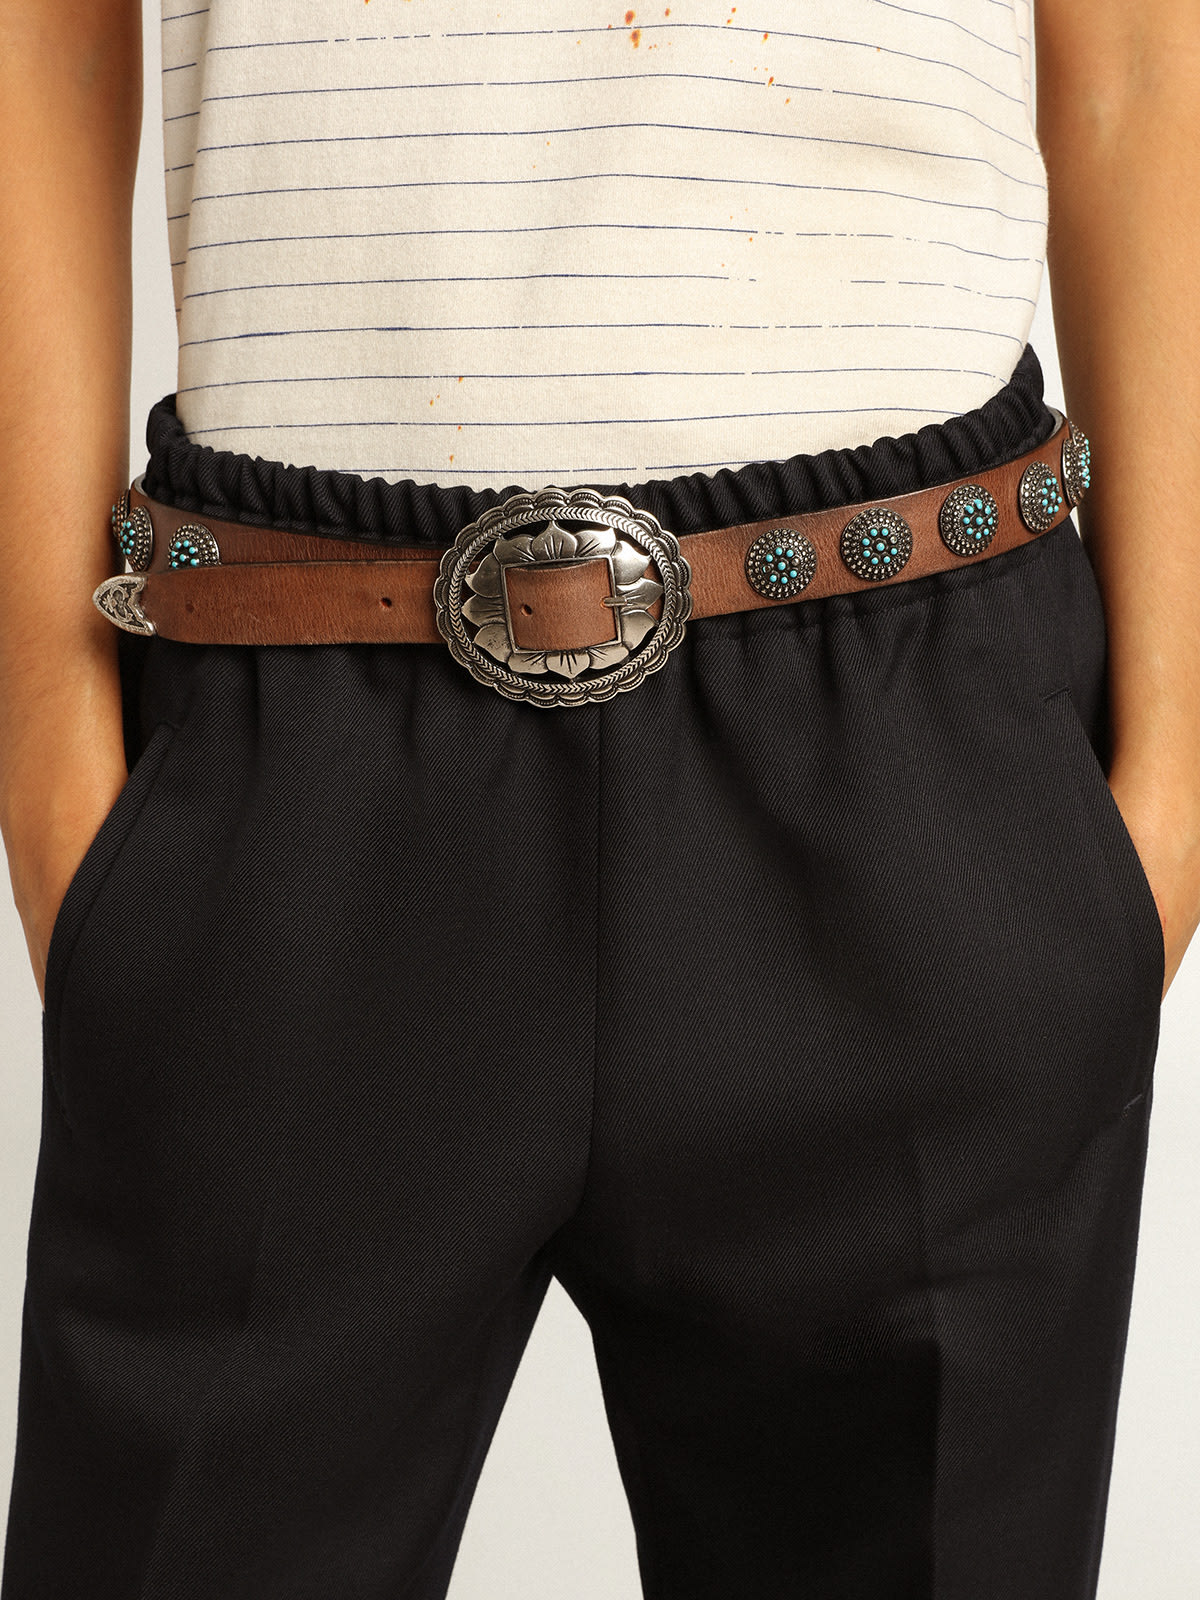 Golden Goose - Women's belt in dark brown leather with silver studs in 